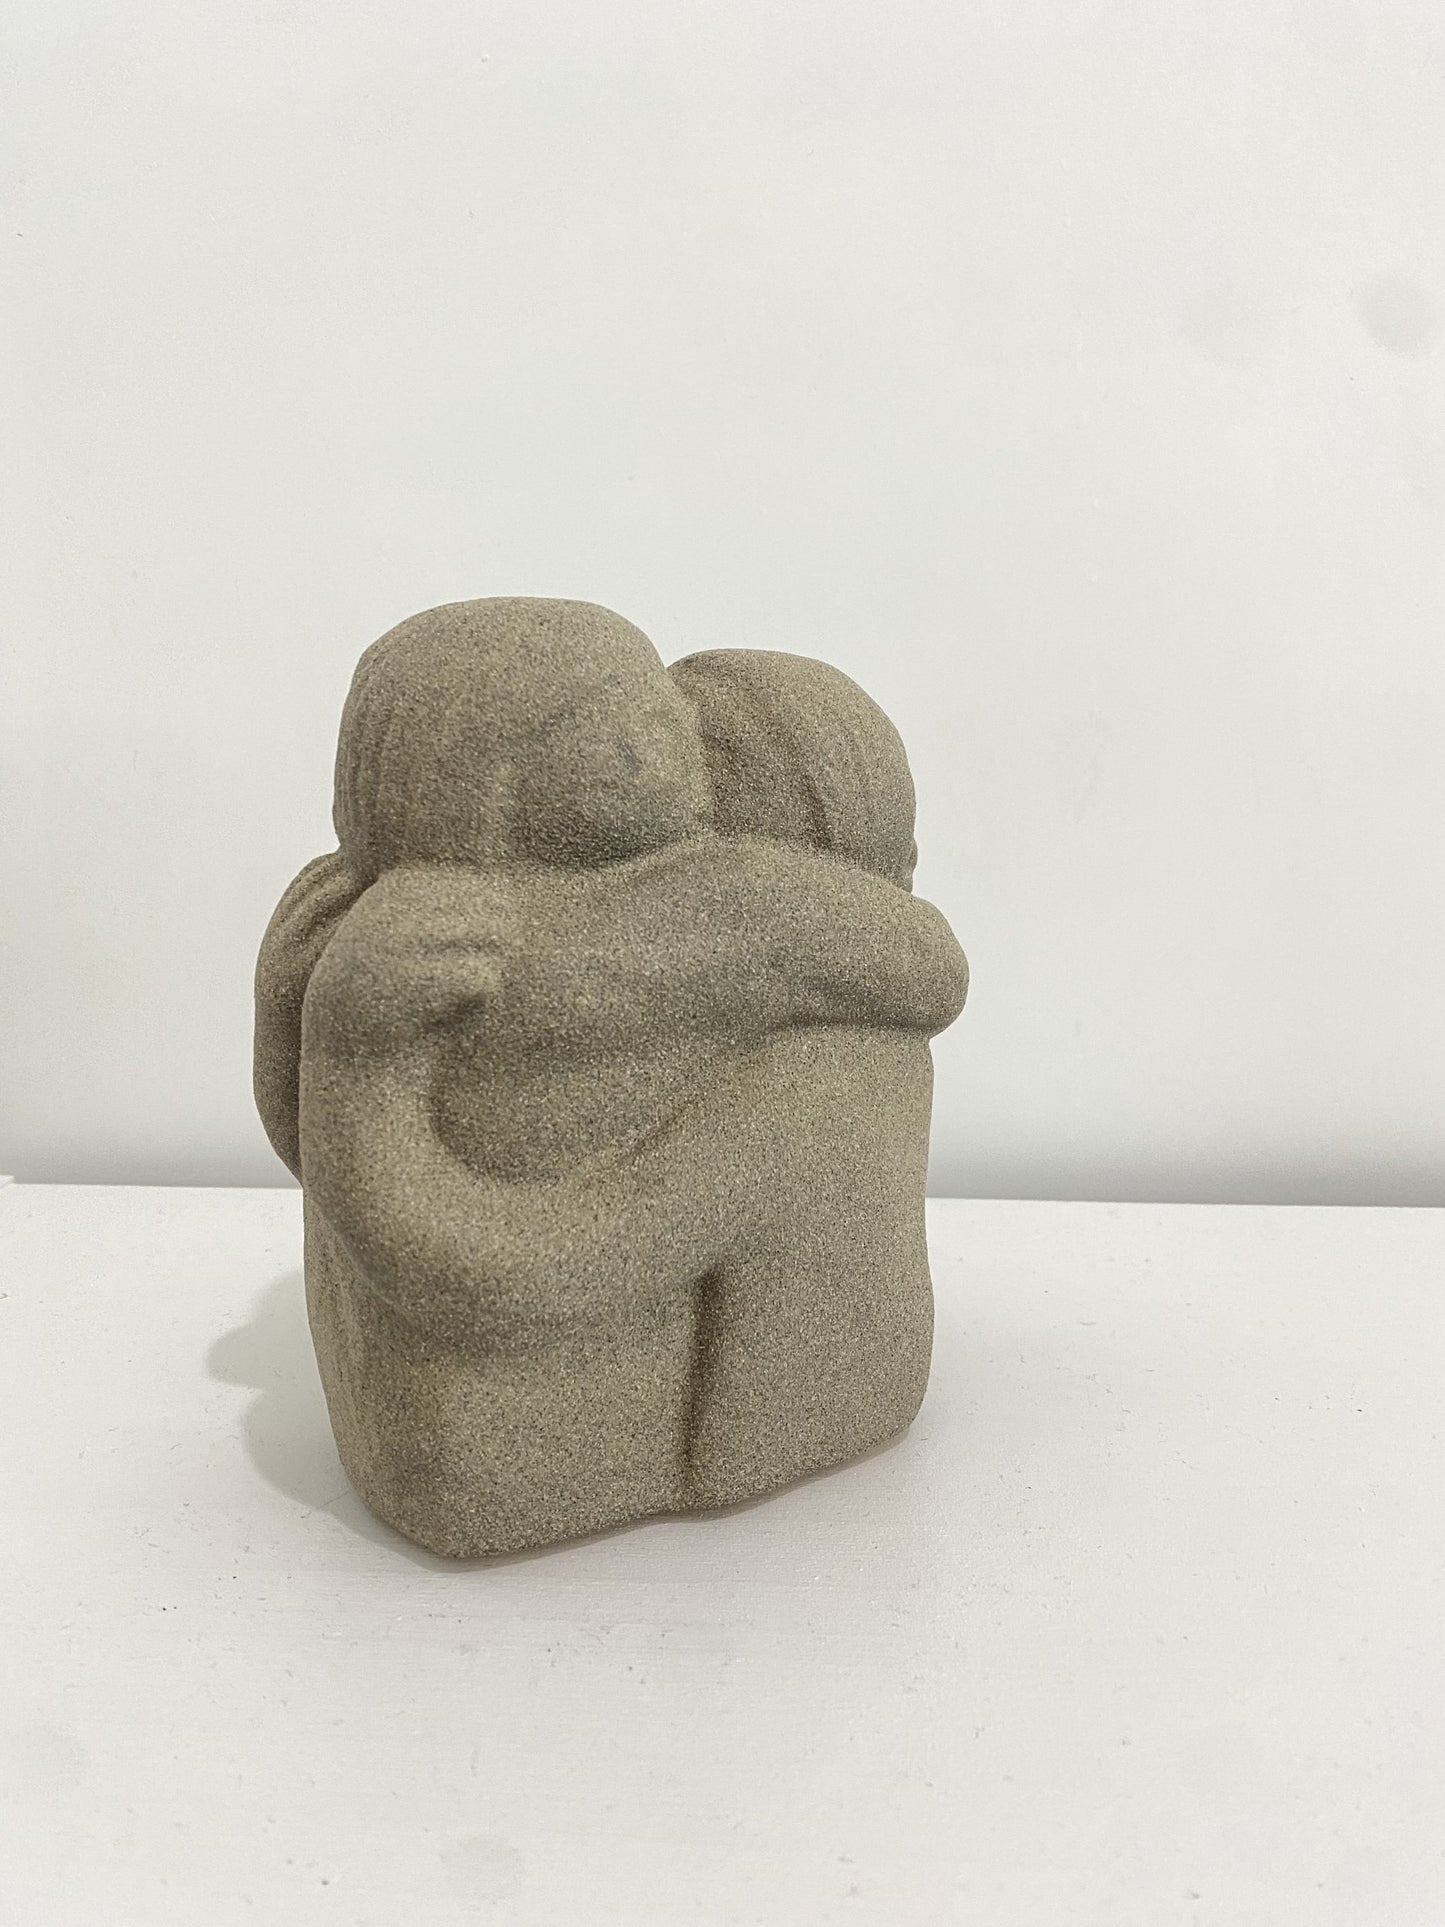 hugging figures figurine